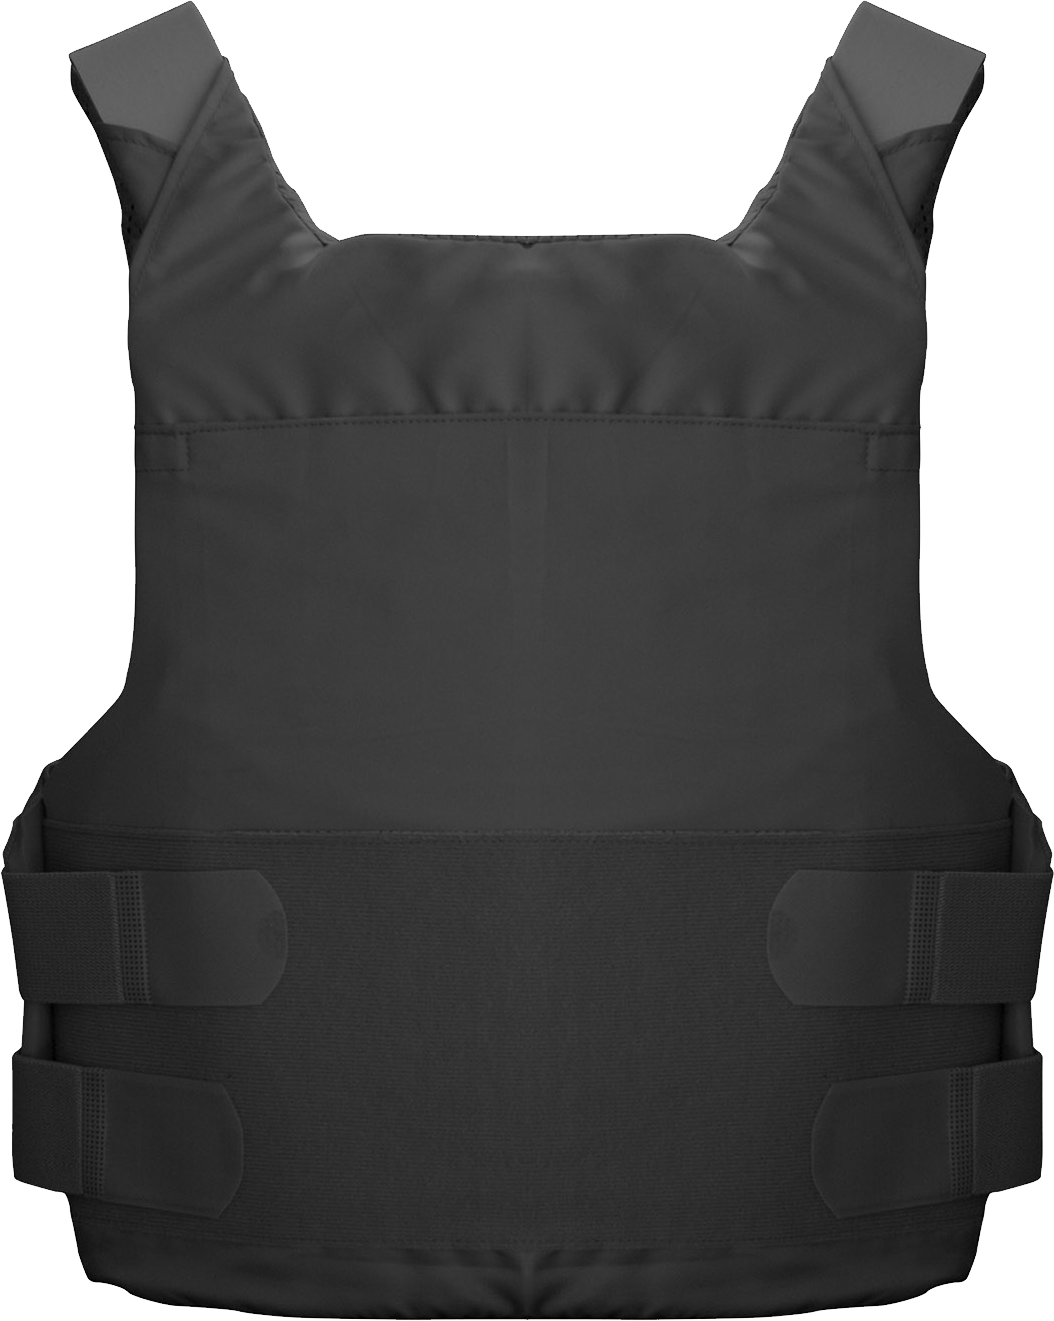 Bulletproof Vest Png - Bulletproof Vest (1054x1321)